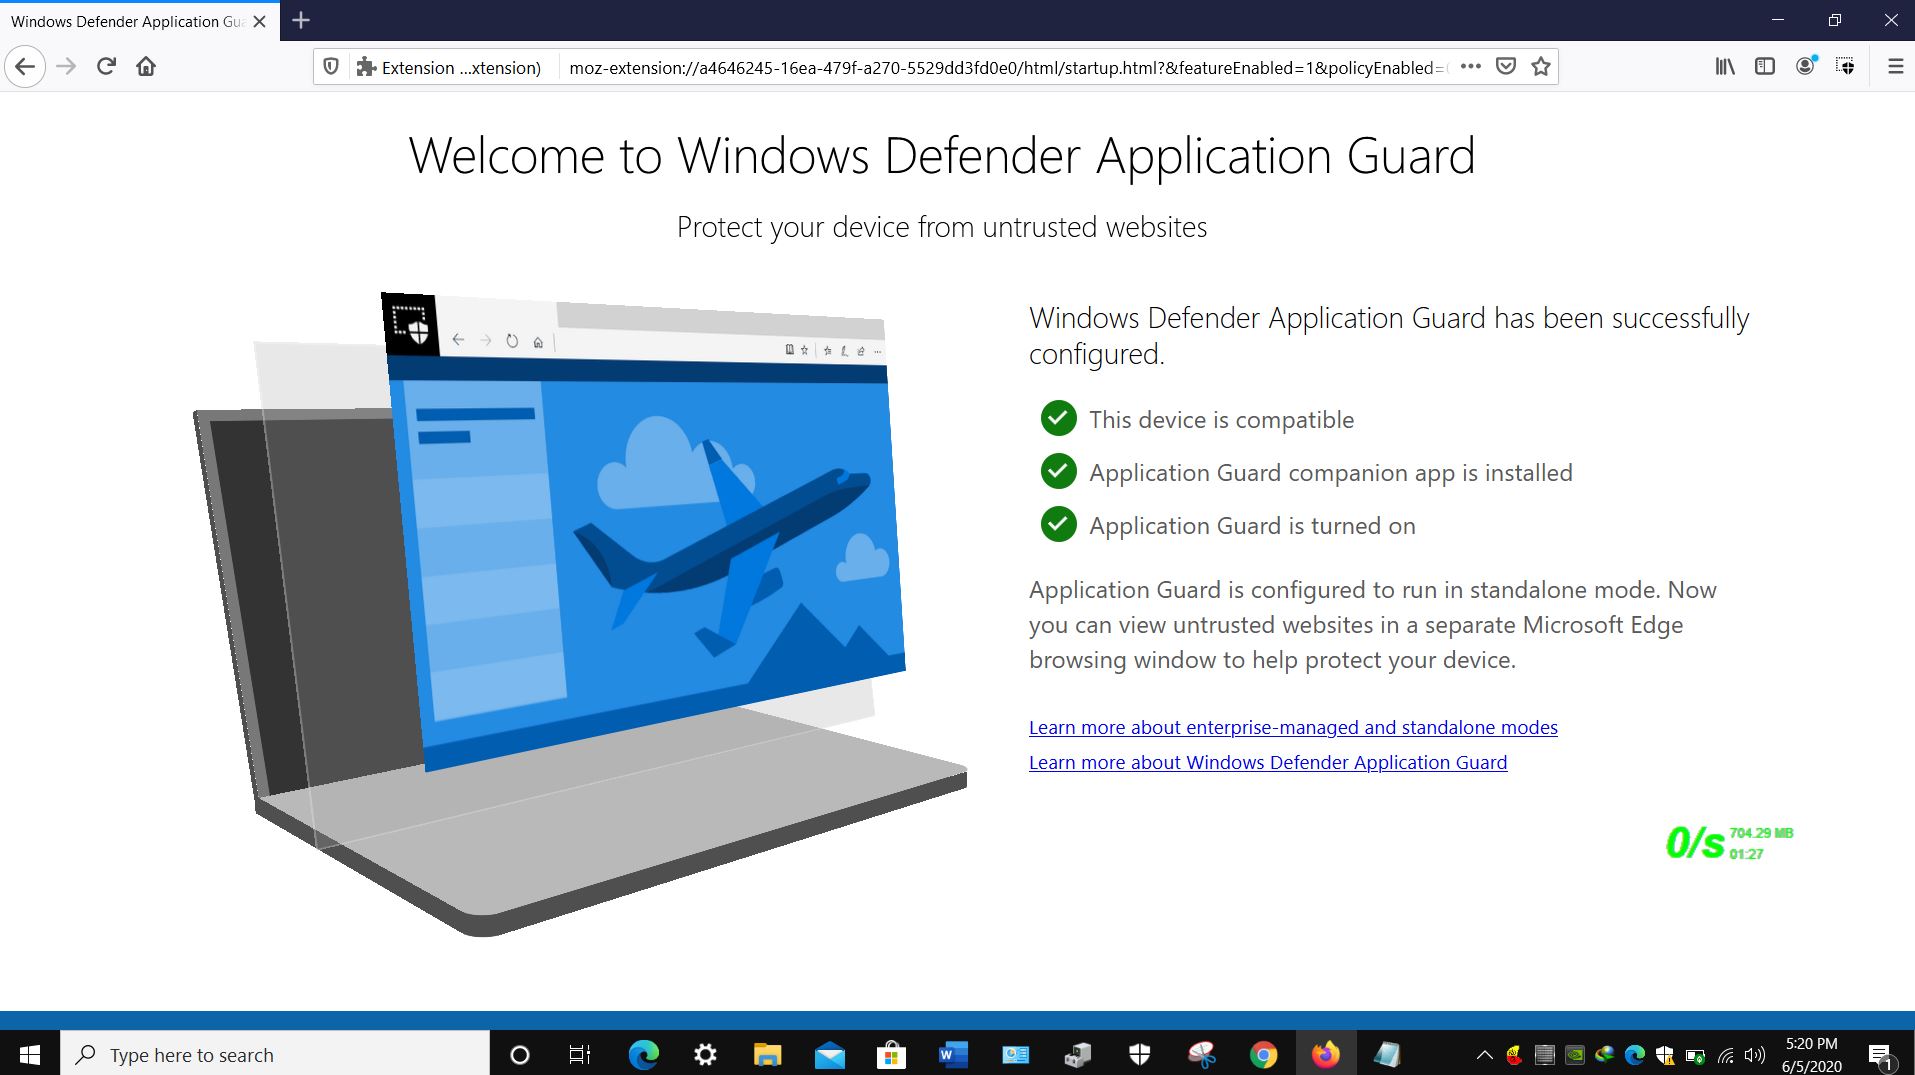 Make your Favorite Browser to more secure by enabling windowsb defender application guard... 5ccee911-26e6-4eff-8869-32d634d88048?upload=true.jpg